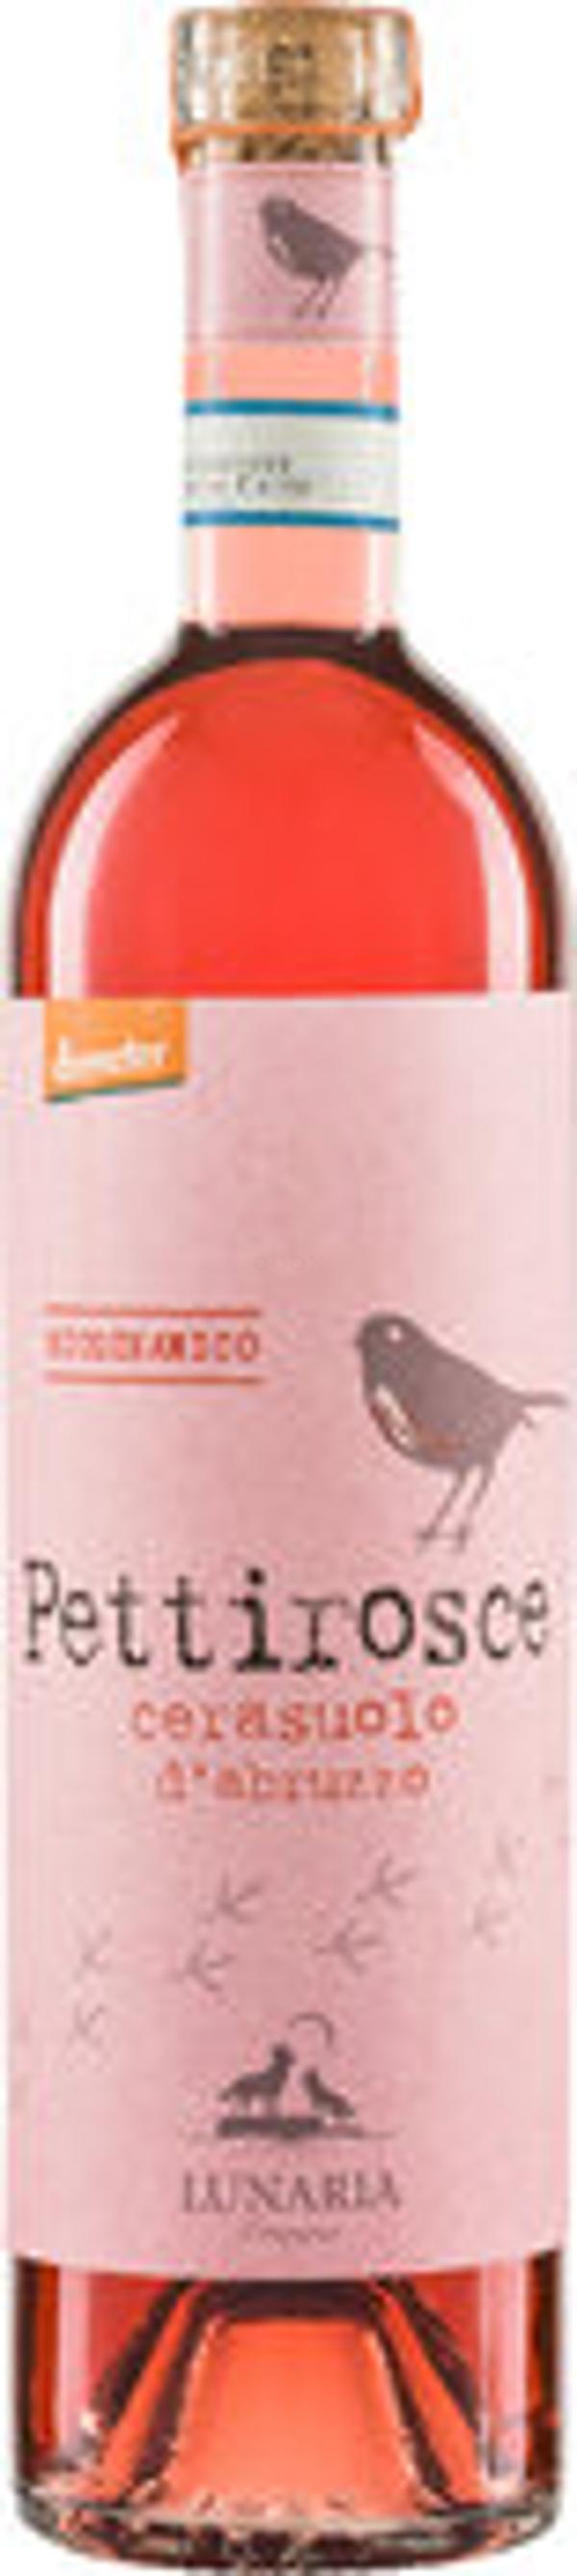 Produktfoto zu Pettirosce Cerasuolo d'Abruzzo rosé 0,75l